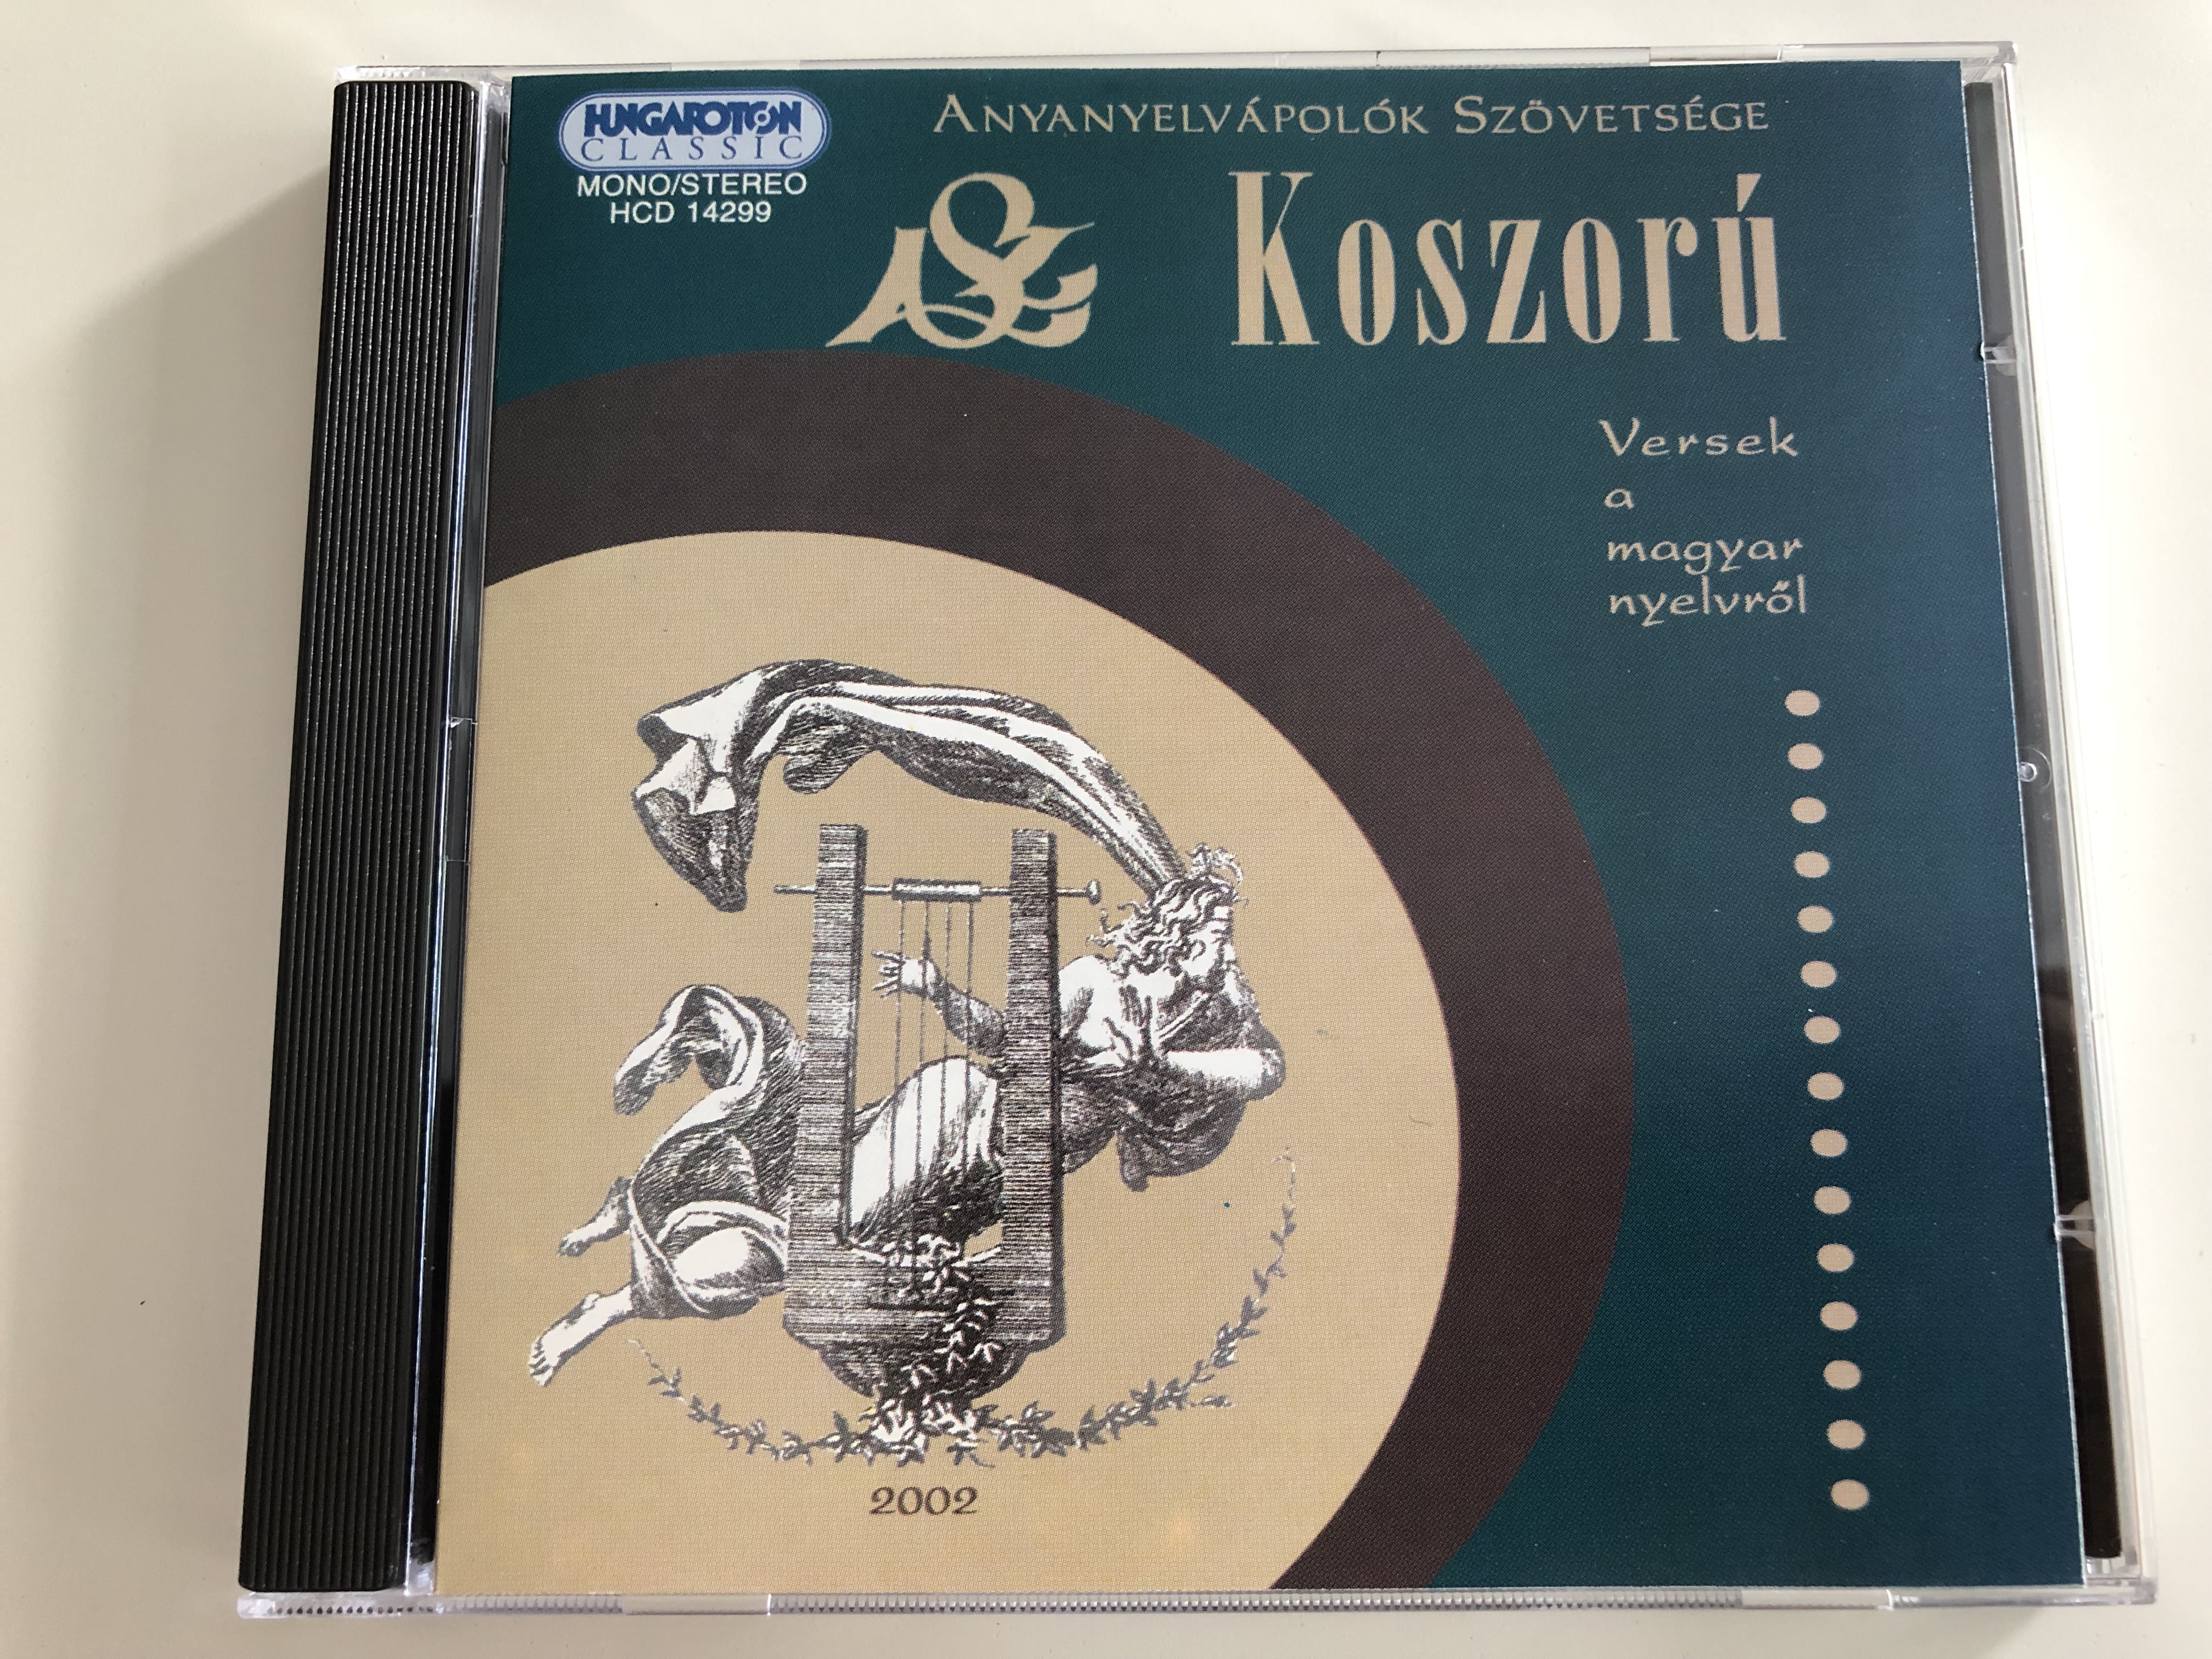 anyanyelv-pol-k-sz-vets-ge-koszor-versek-a-magyar-nyelvr-l-hungaroton-classic-audio-cd-2002-hcd-14299-1-.jpg